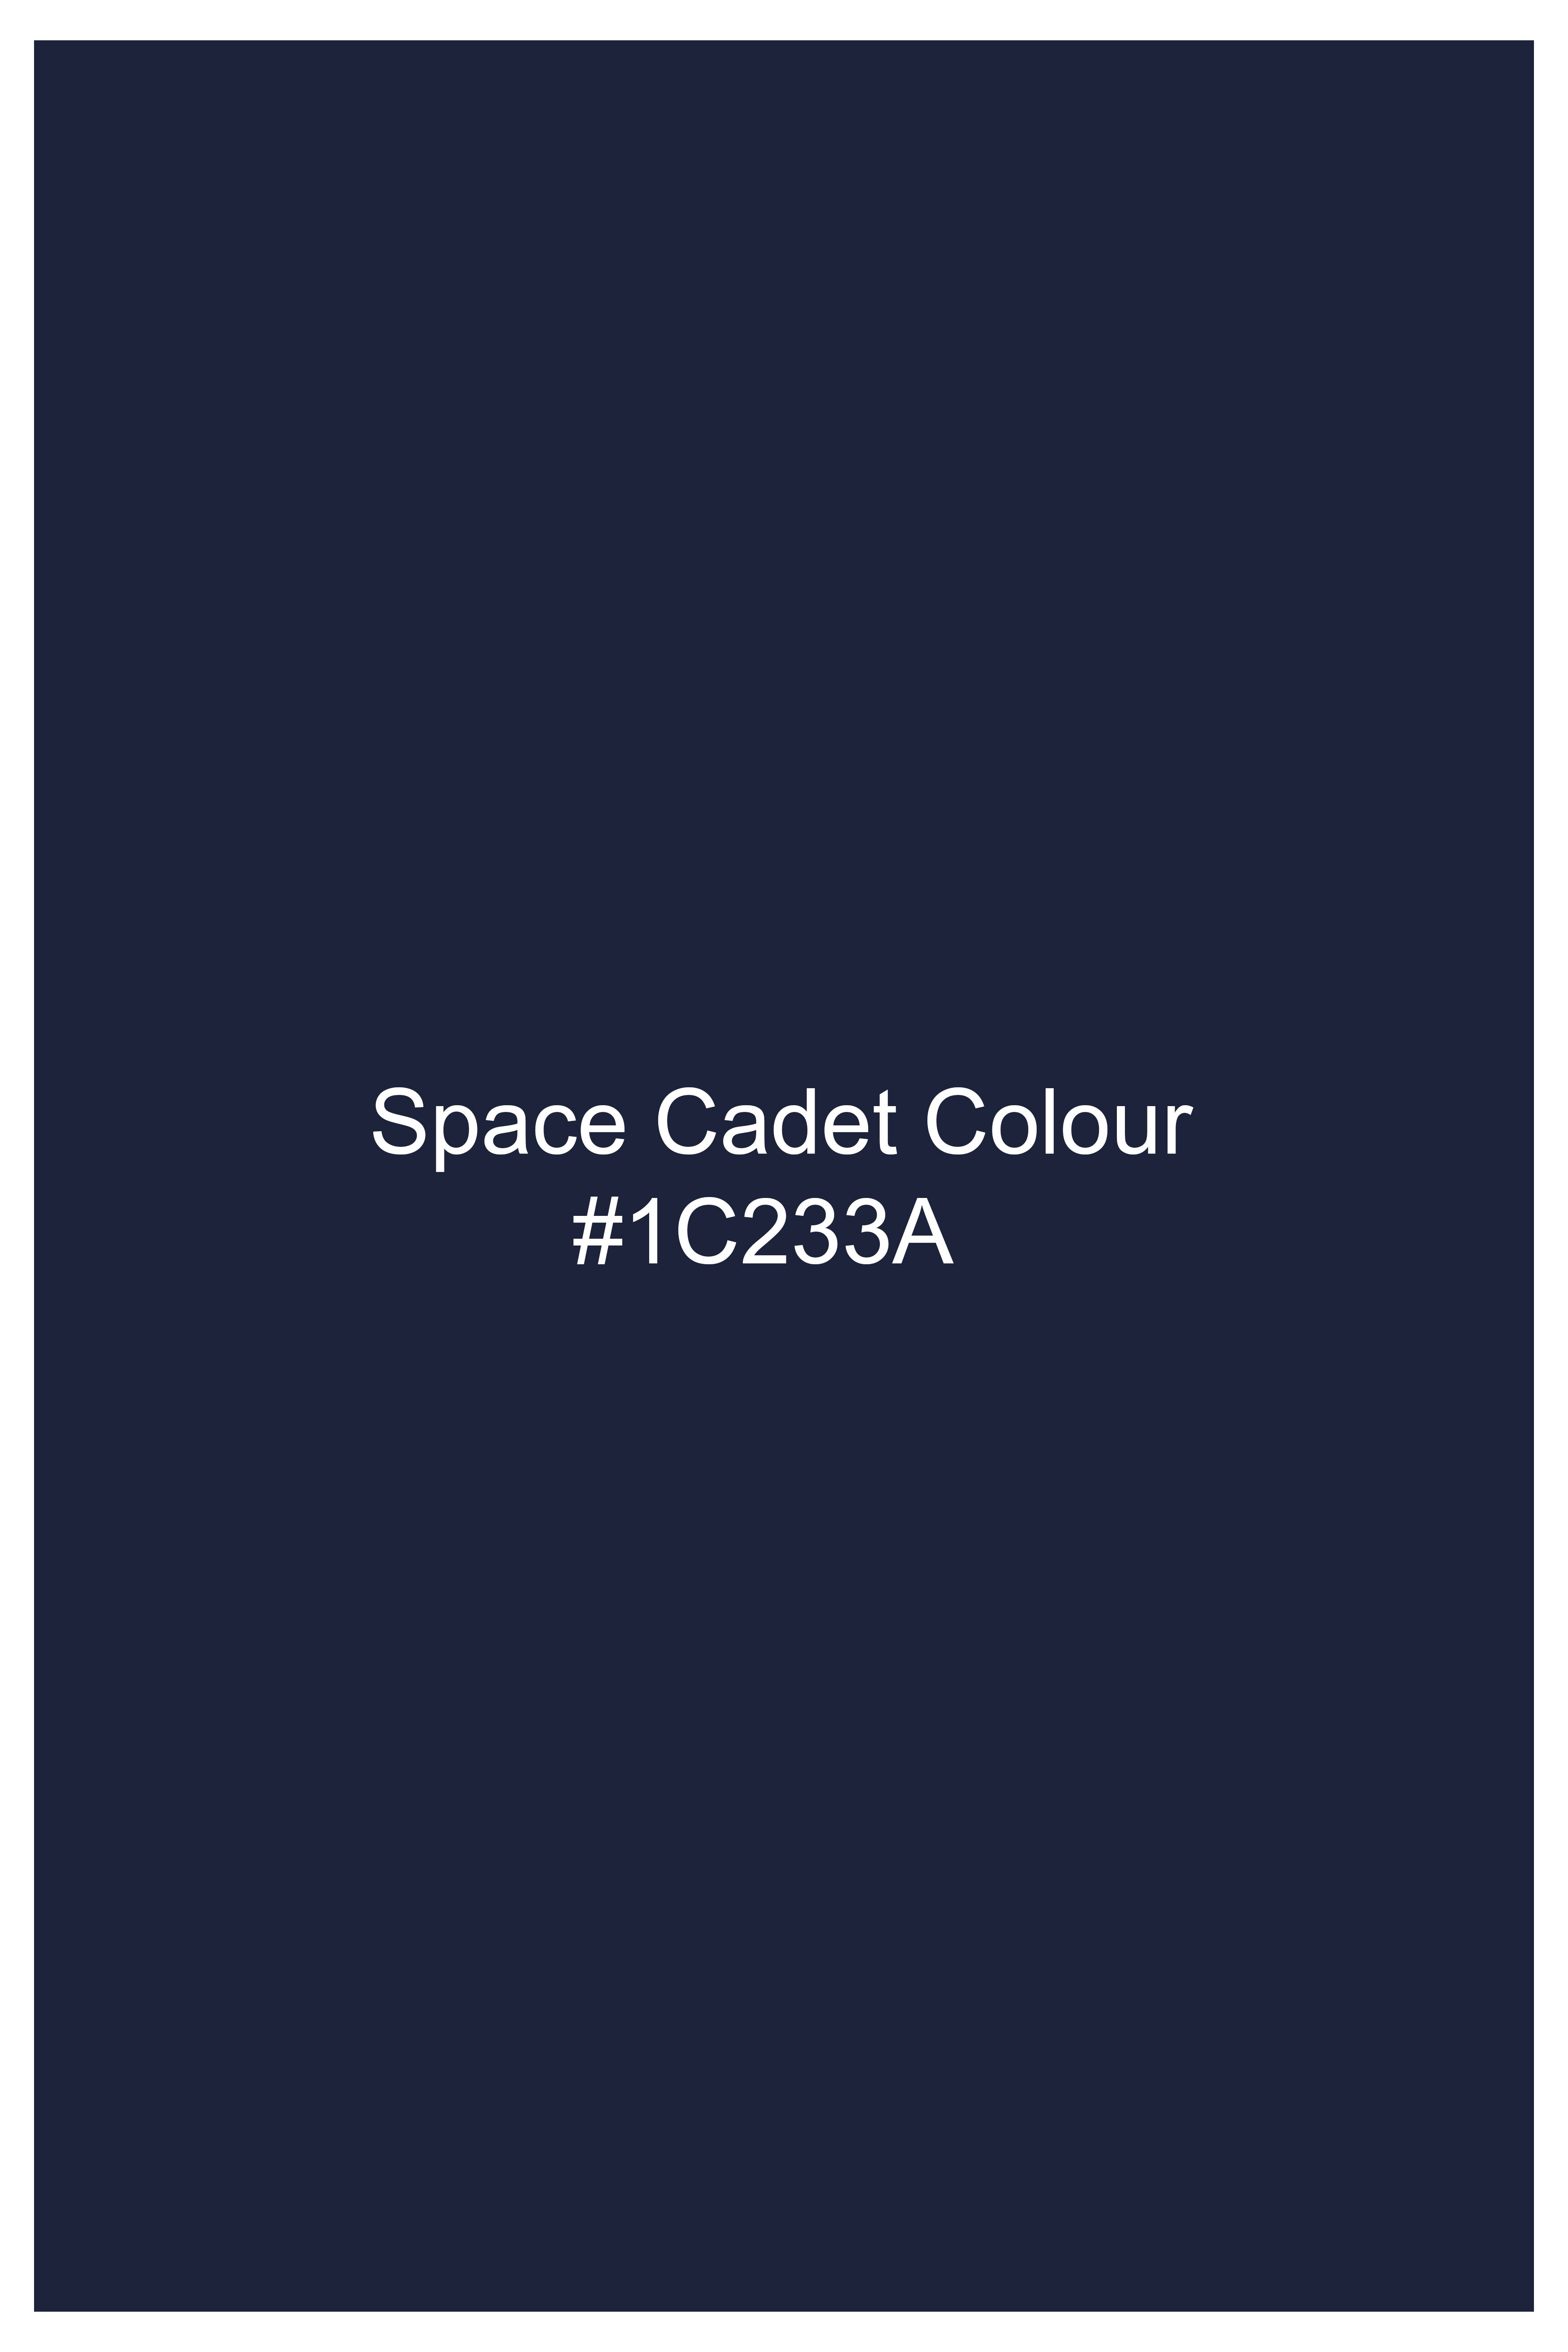 Space Cadet Blue Wool Rich Waistcoat V2939-36, V2939-38, V2939-40, V2939-42, V2939-44, V2939-46, V2939-48, V2939-50, V2939-39, V2939-54, V2939-56, V2939-58, V2939-60